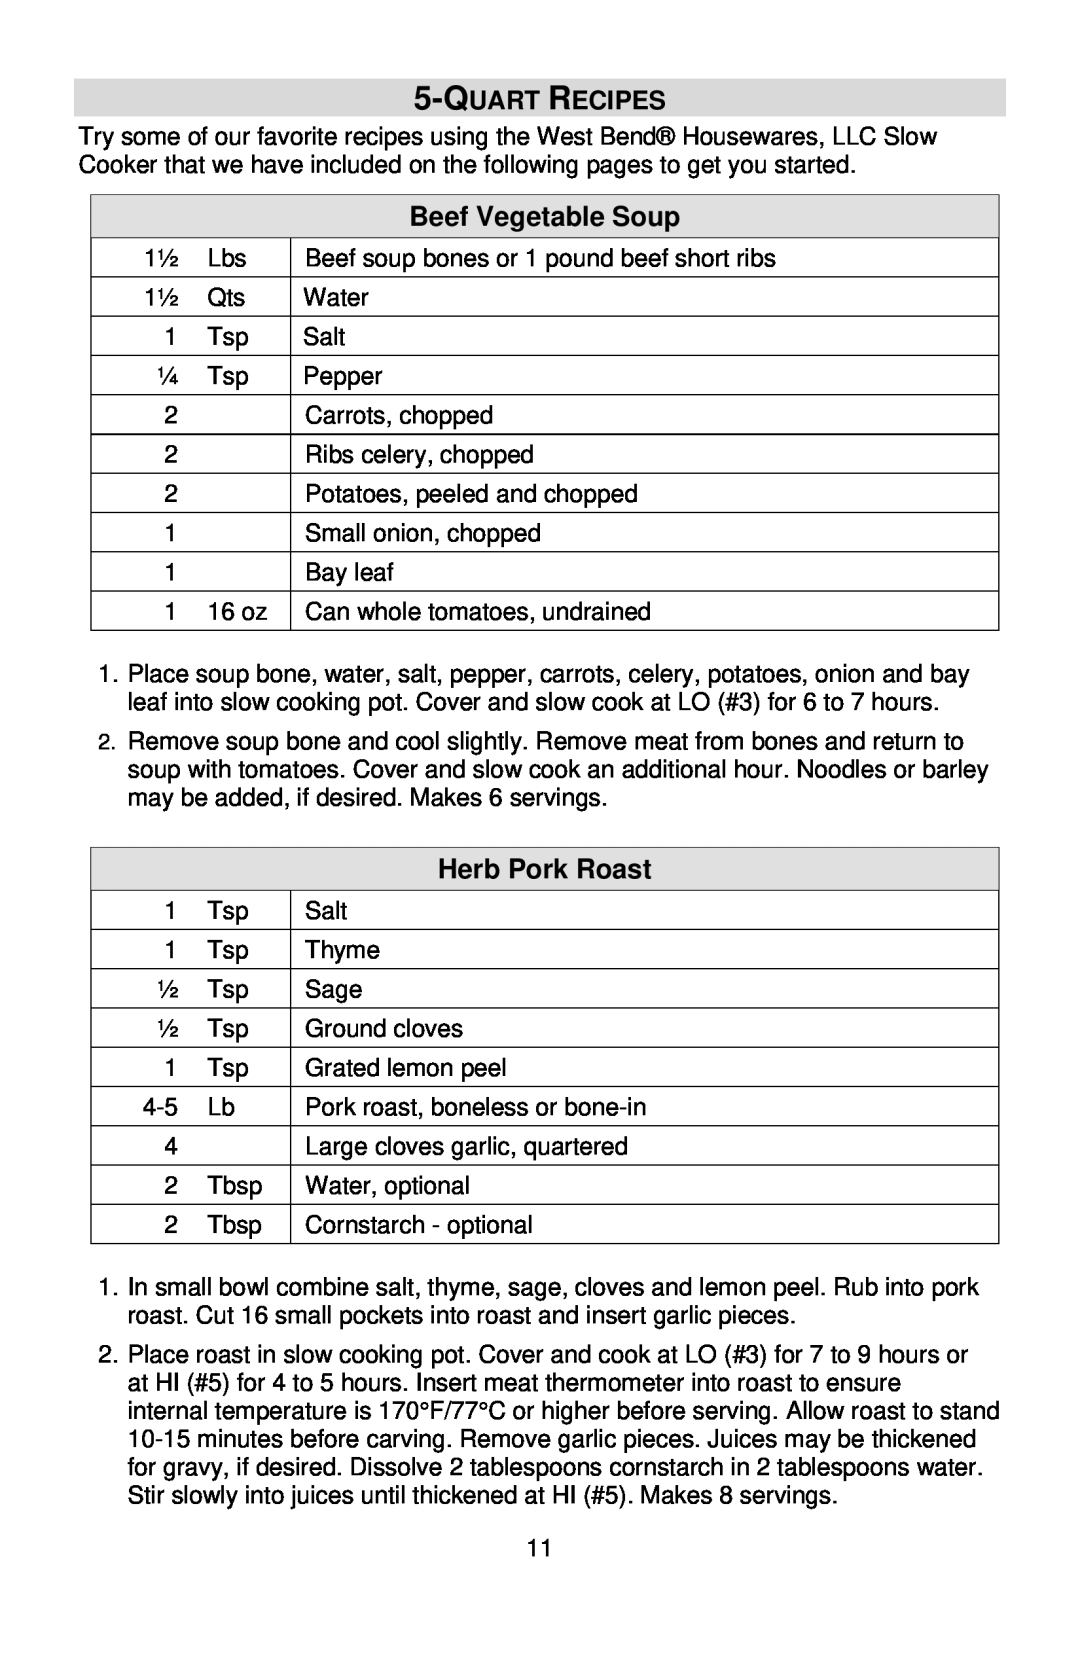 West Bend 5-6 QUART SLOW COOKERS instruction manual Quart Recipes, Beef Vegetable Soup, Herb Pork Roast 